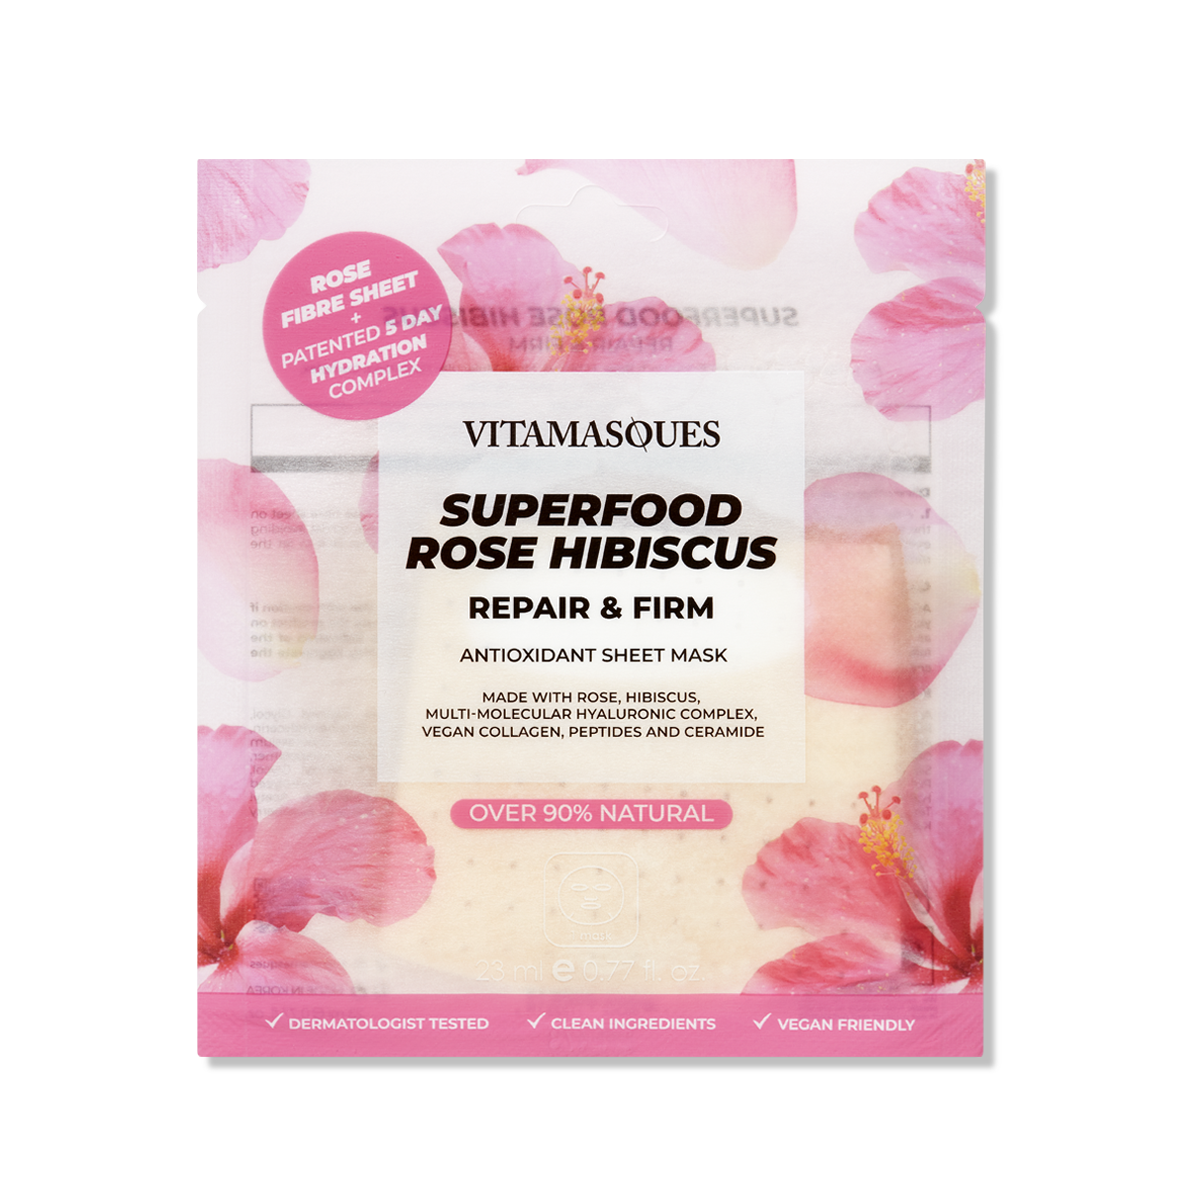 Superfood Rose Hibiscus Repair & Firm Antioxidant Face Sheet Mask